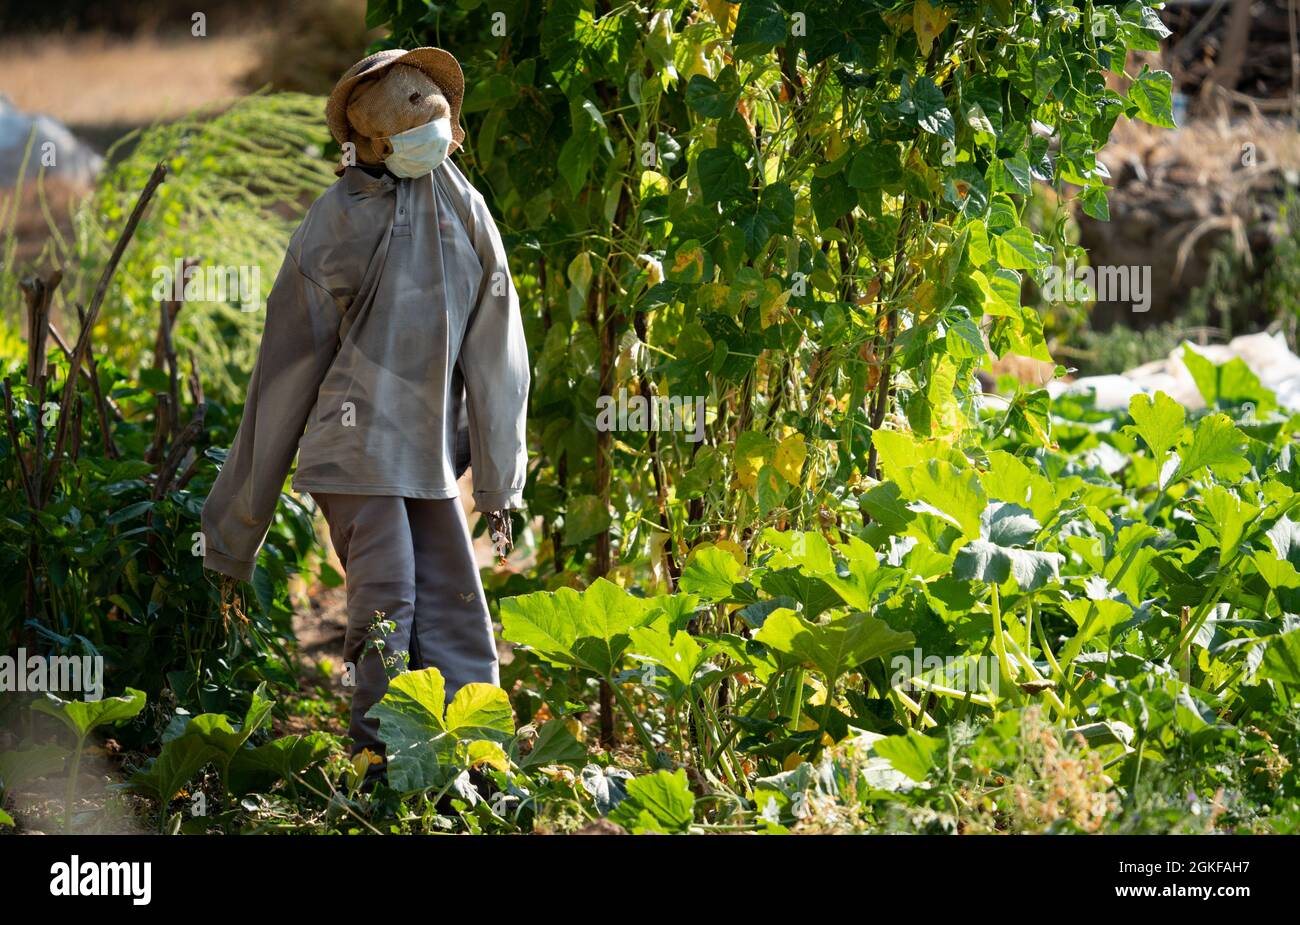 Scarecrow with mask saving the vegetable garden Stock Photo